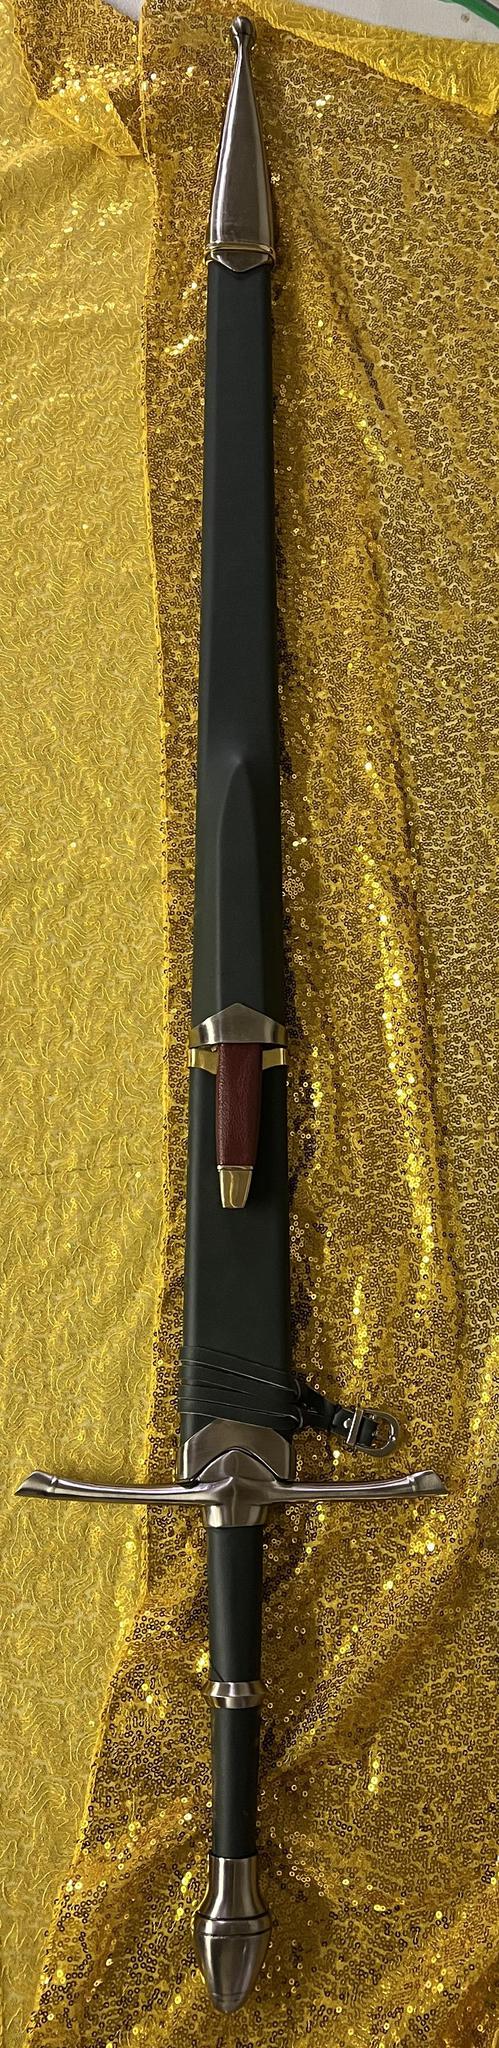 The Hadhafang Sword & Dagger of Arwen Evenstar